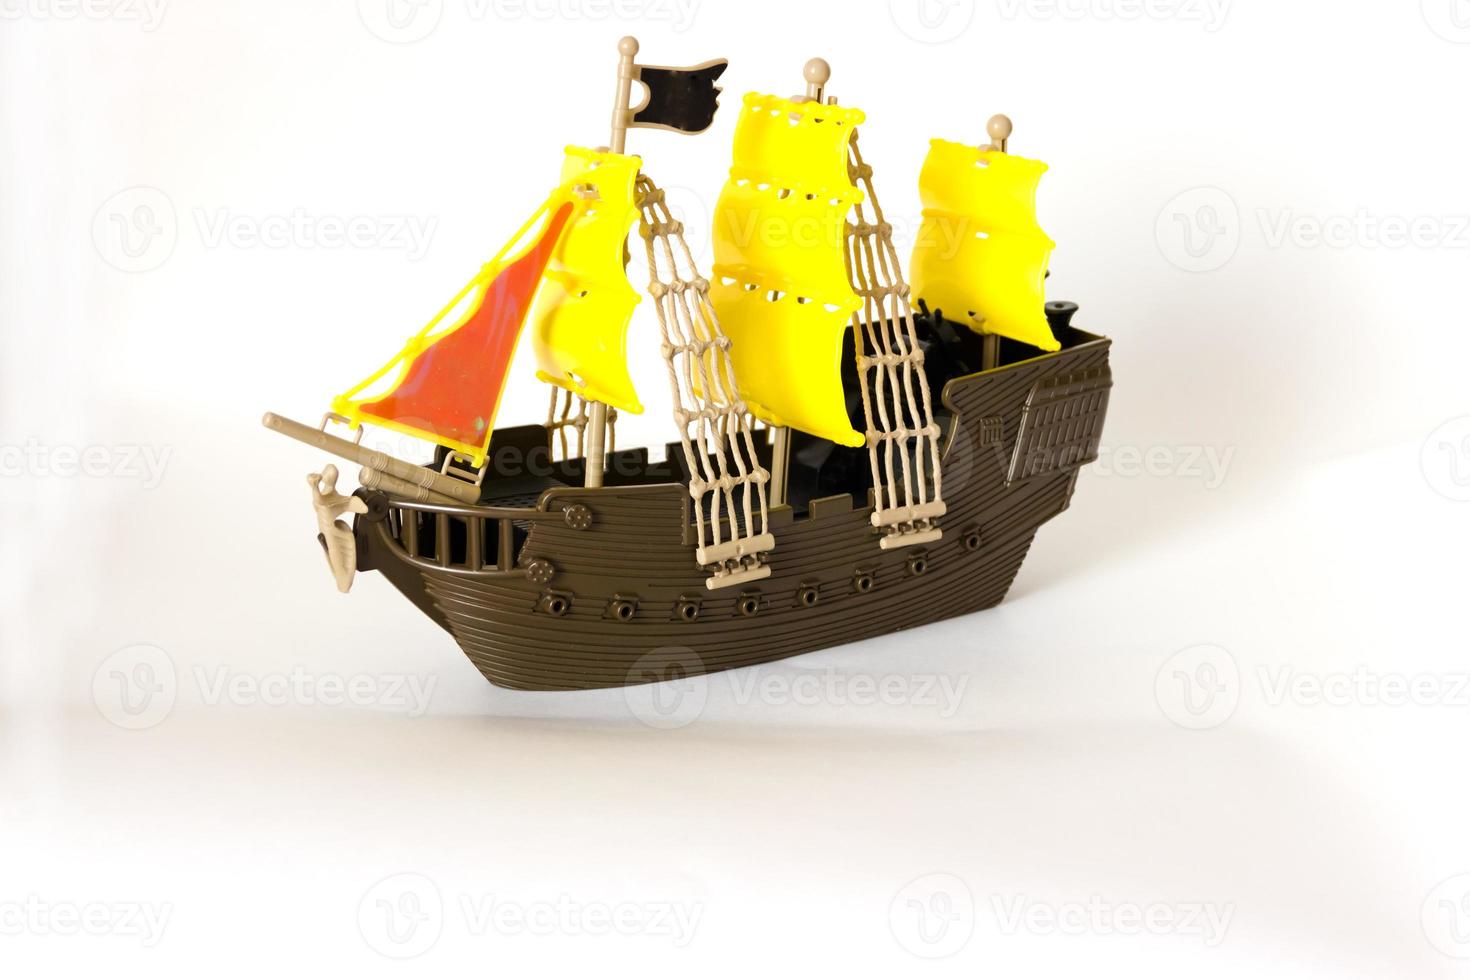 navio de madeira de brinquedo circulando isolado no fundo branco foto